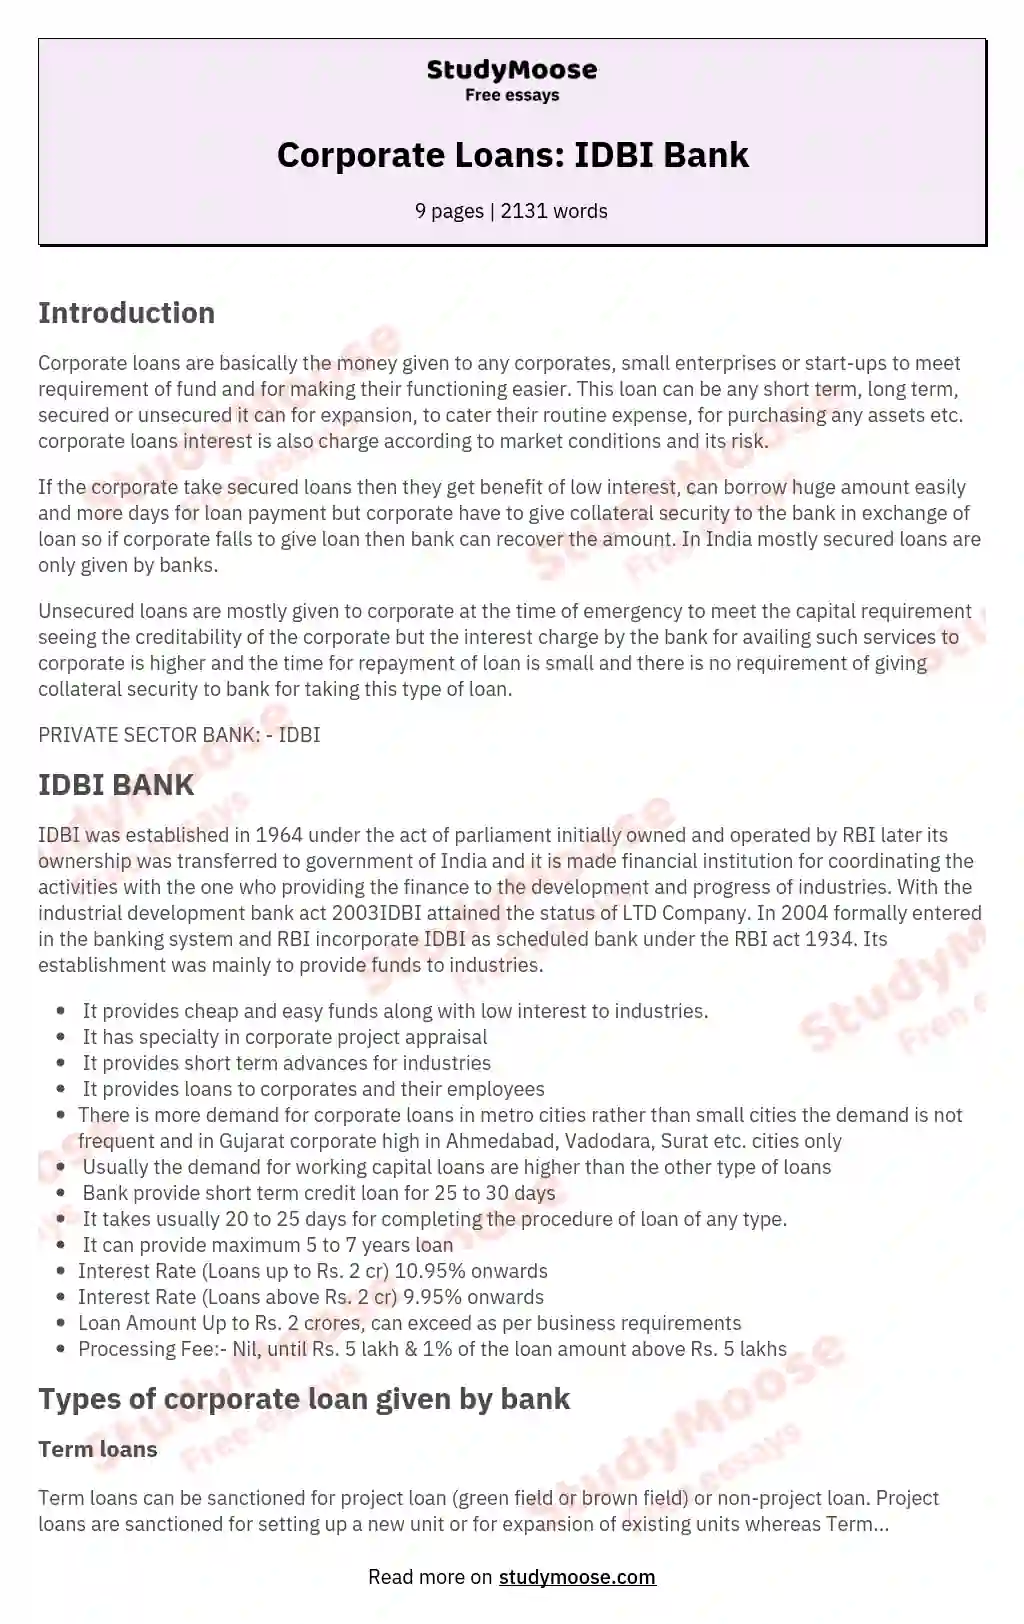 Corporate Loans: IDBI Bank essay